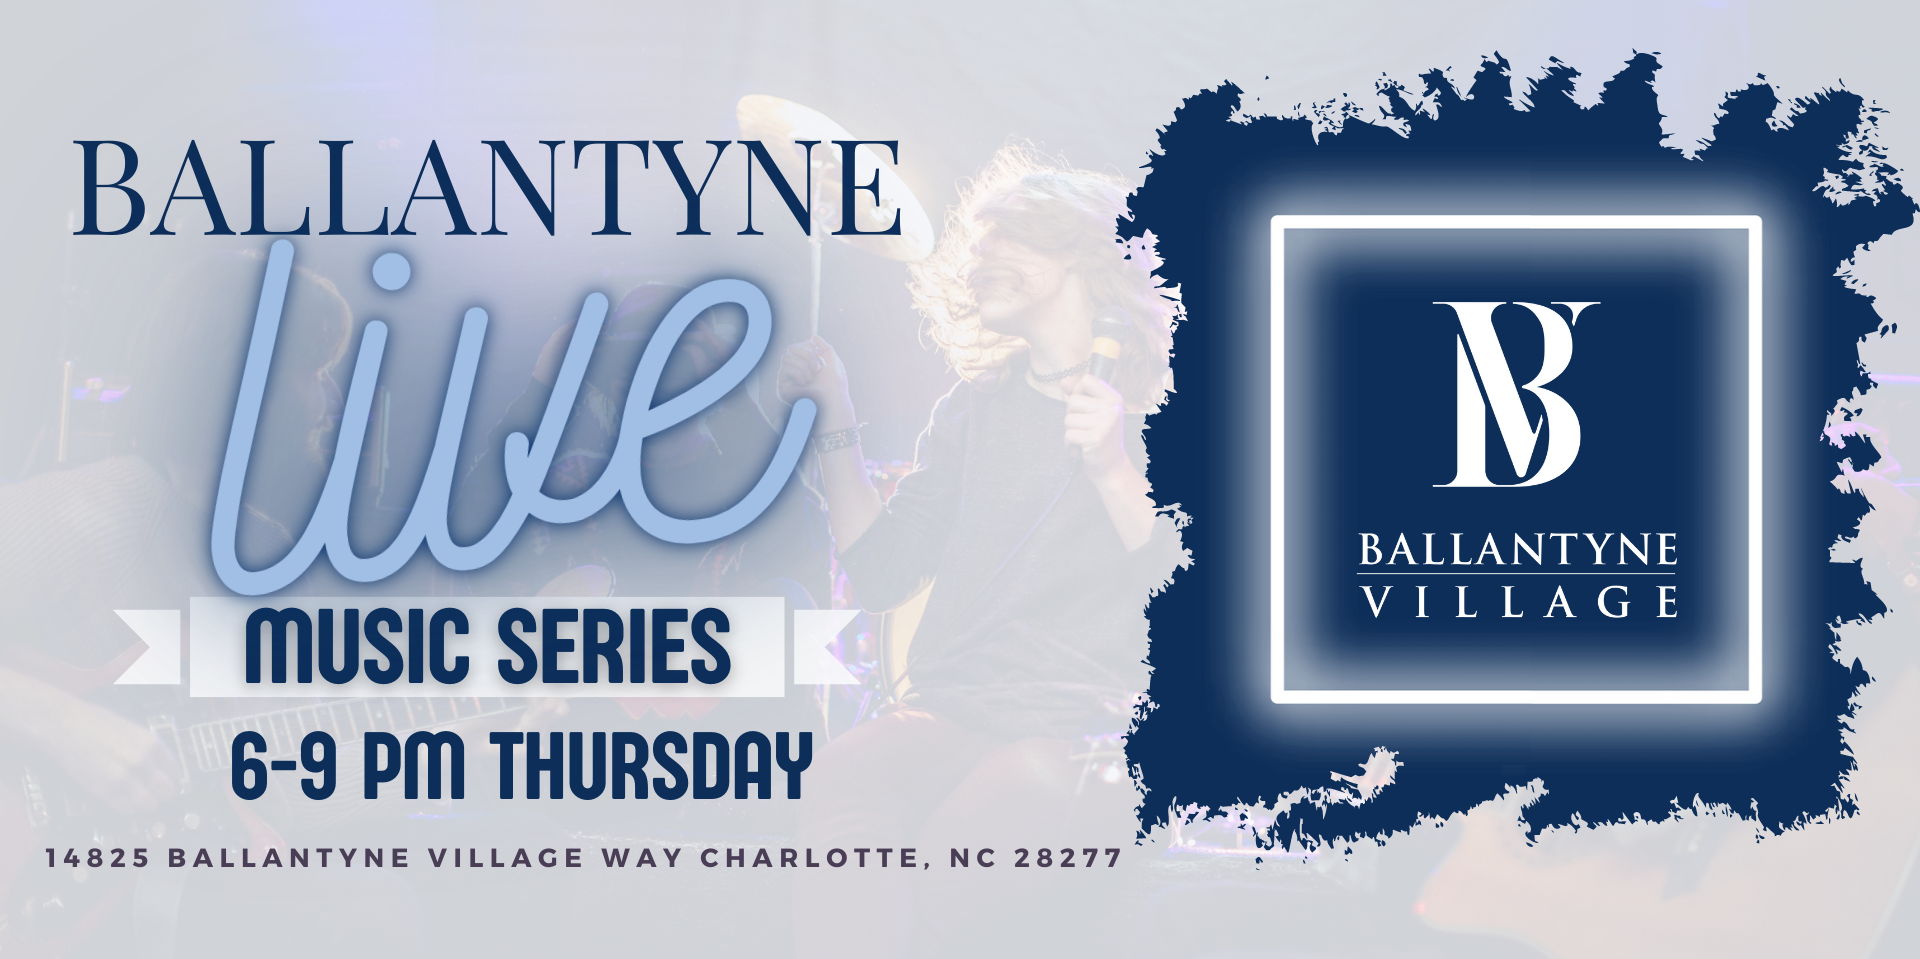 Ballantyne Live promotional image